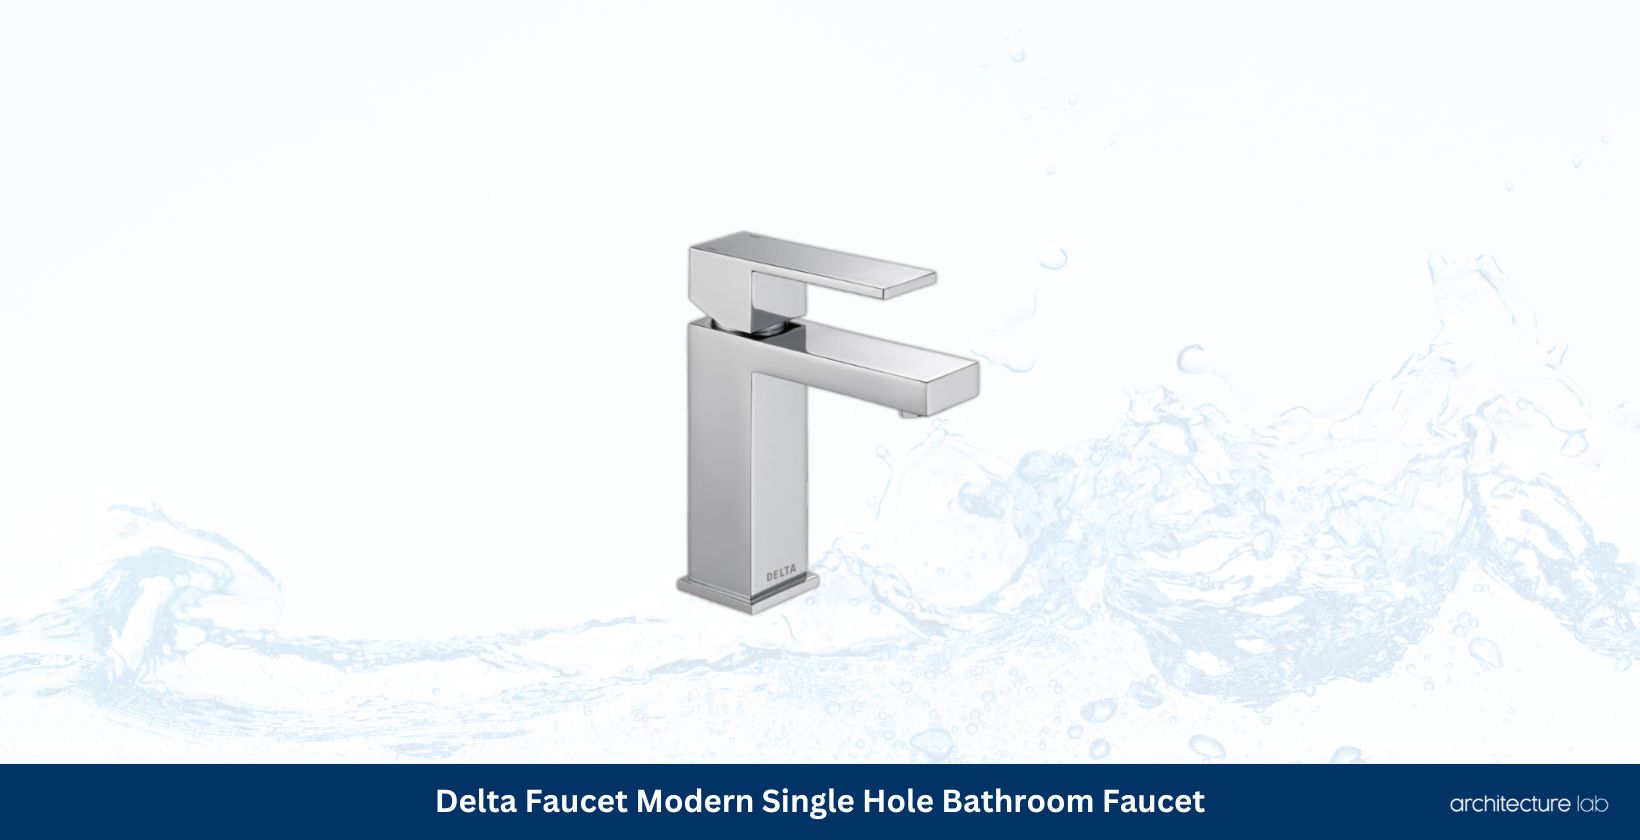 Delta faucet modern single hole bathroom faucet 567lf pp